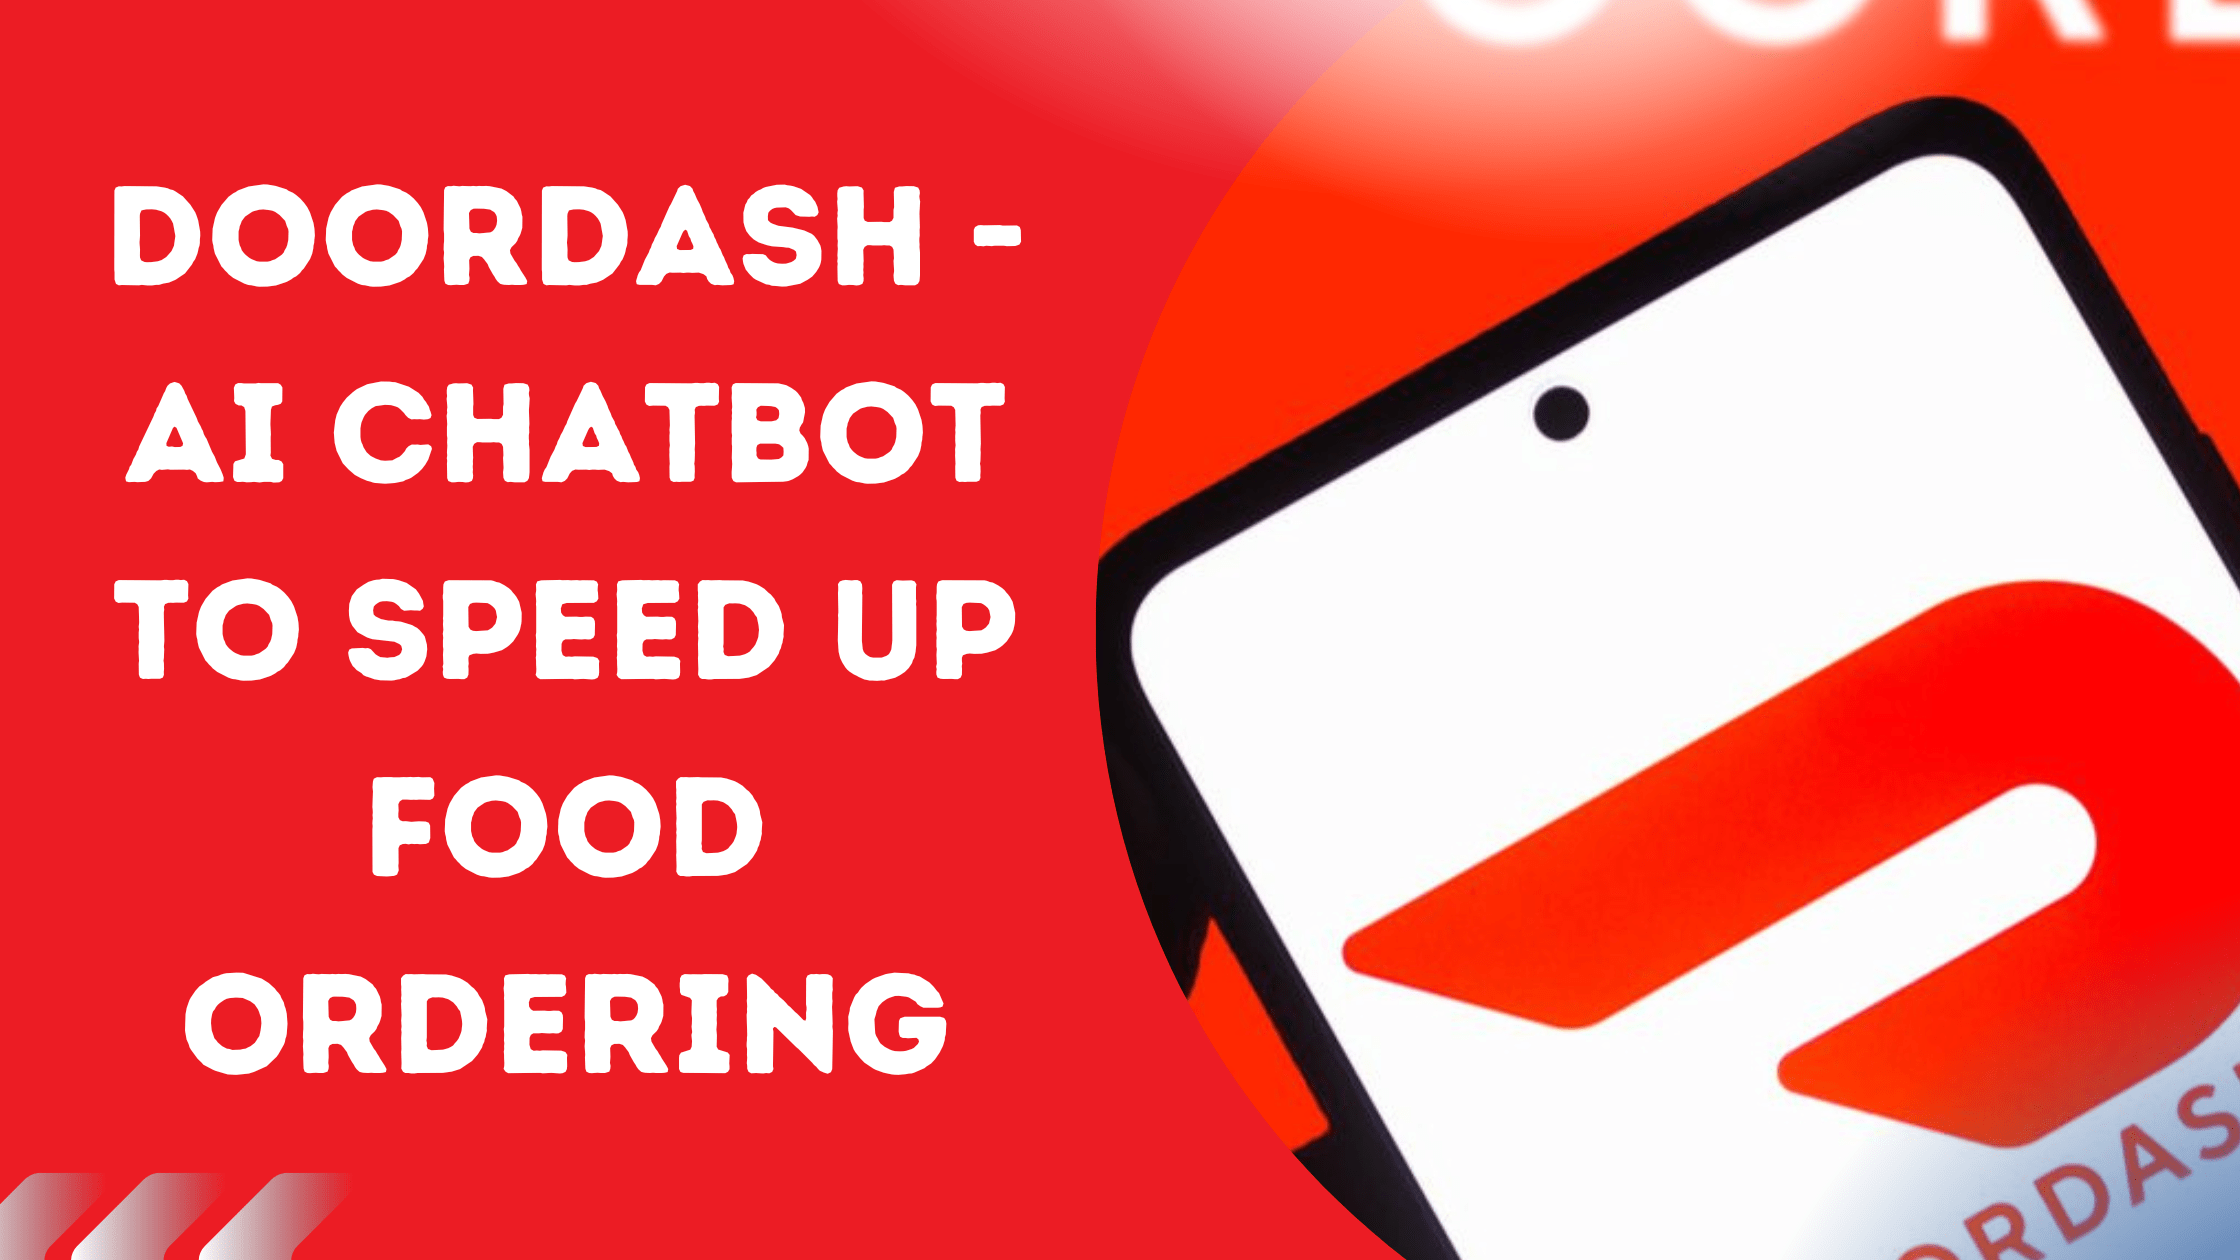 DoorDash - AI Chatbot to Speed Up Food Ordering